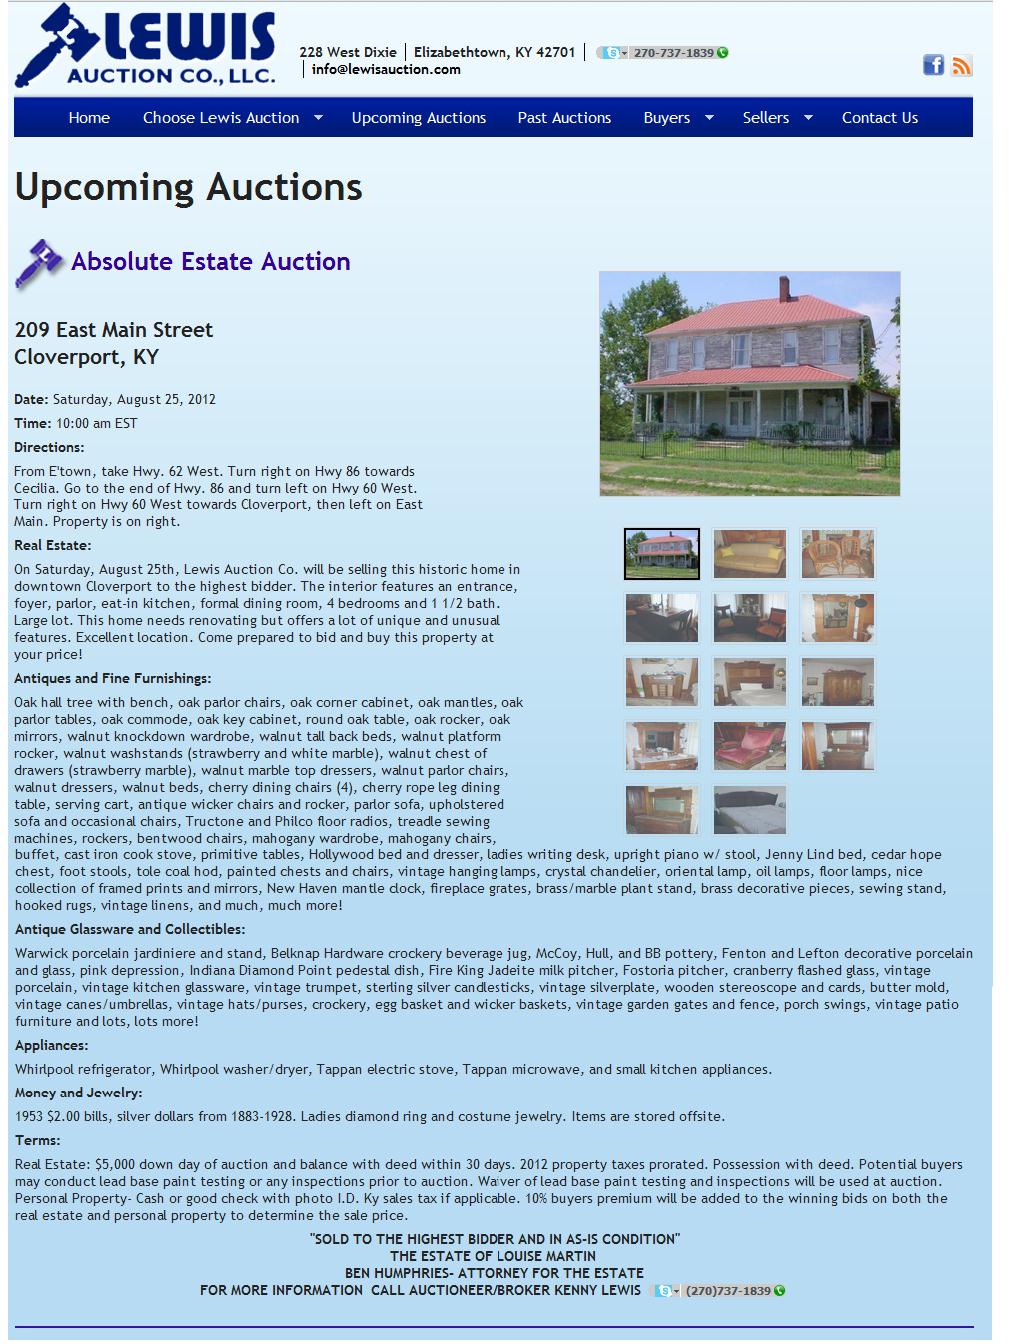 Cloverport Auction 25 Aug Probably JM WHITE house